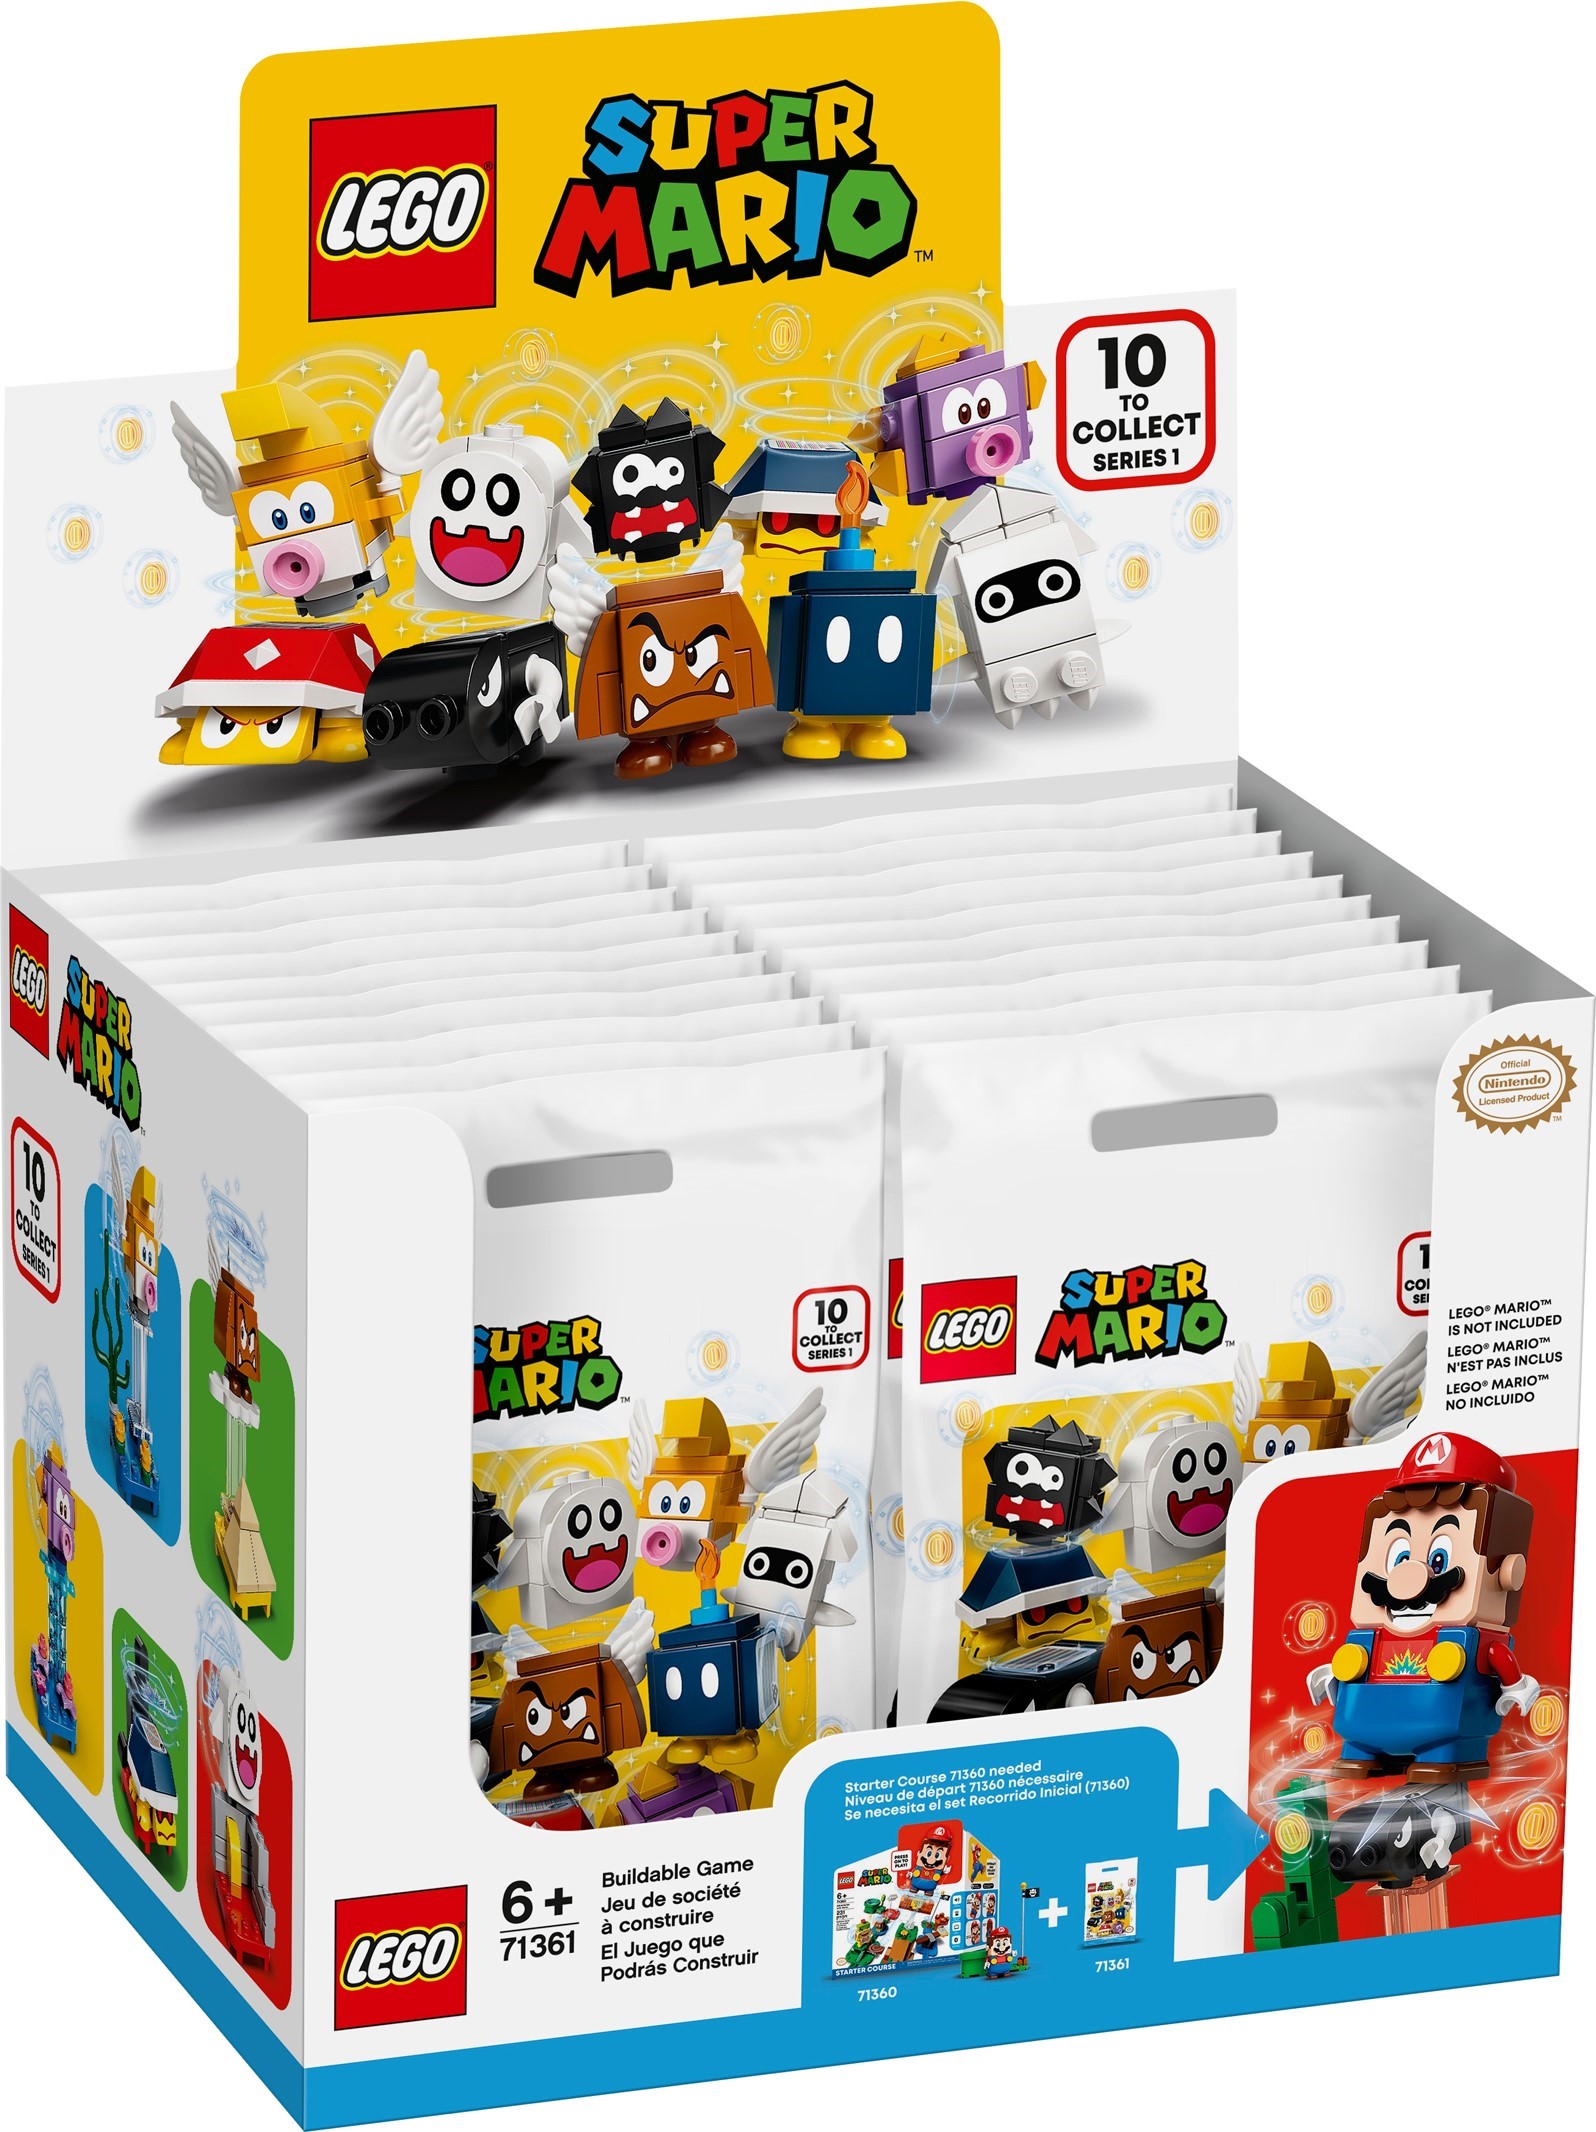 LEGO Super Mario Starter Course 71360 Bag 4 SEALED NEW! Question Box Platforms 